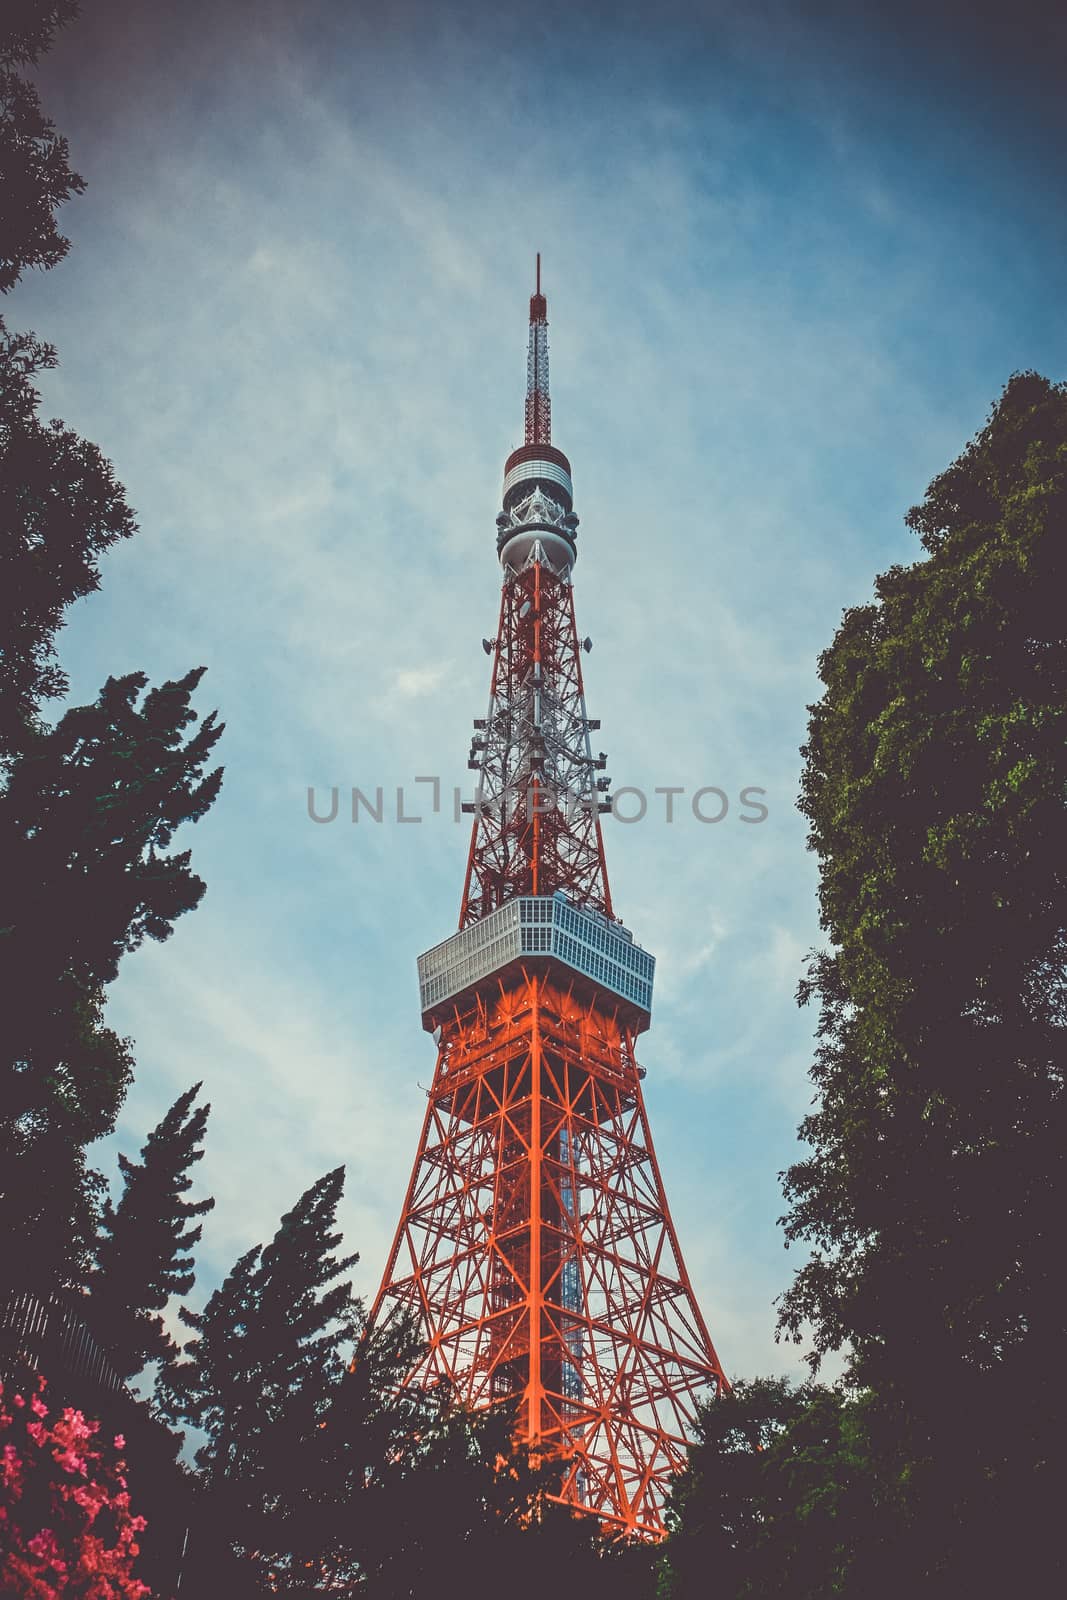 Tokyo tower, Japan by daboost